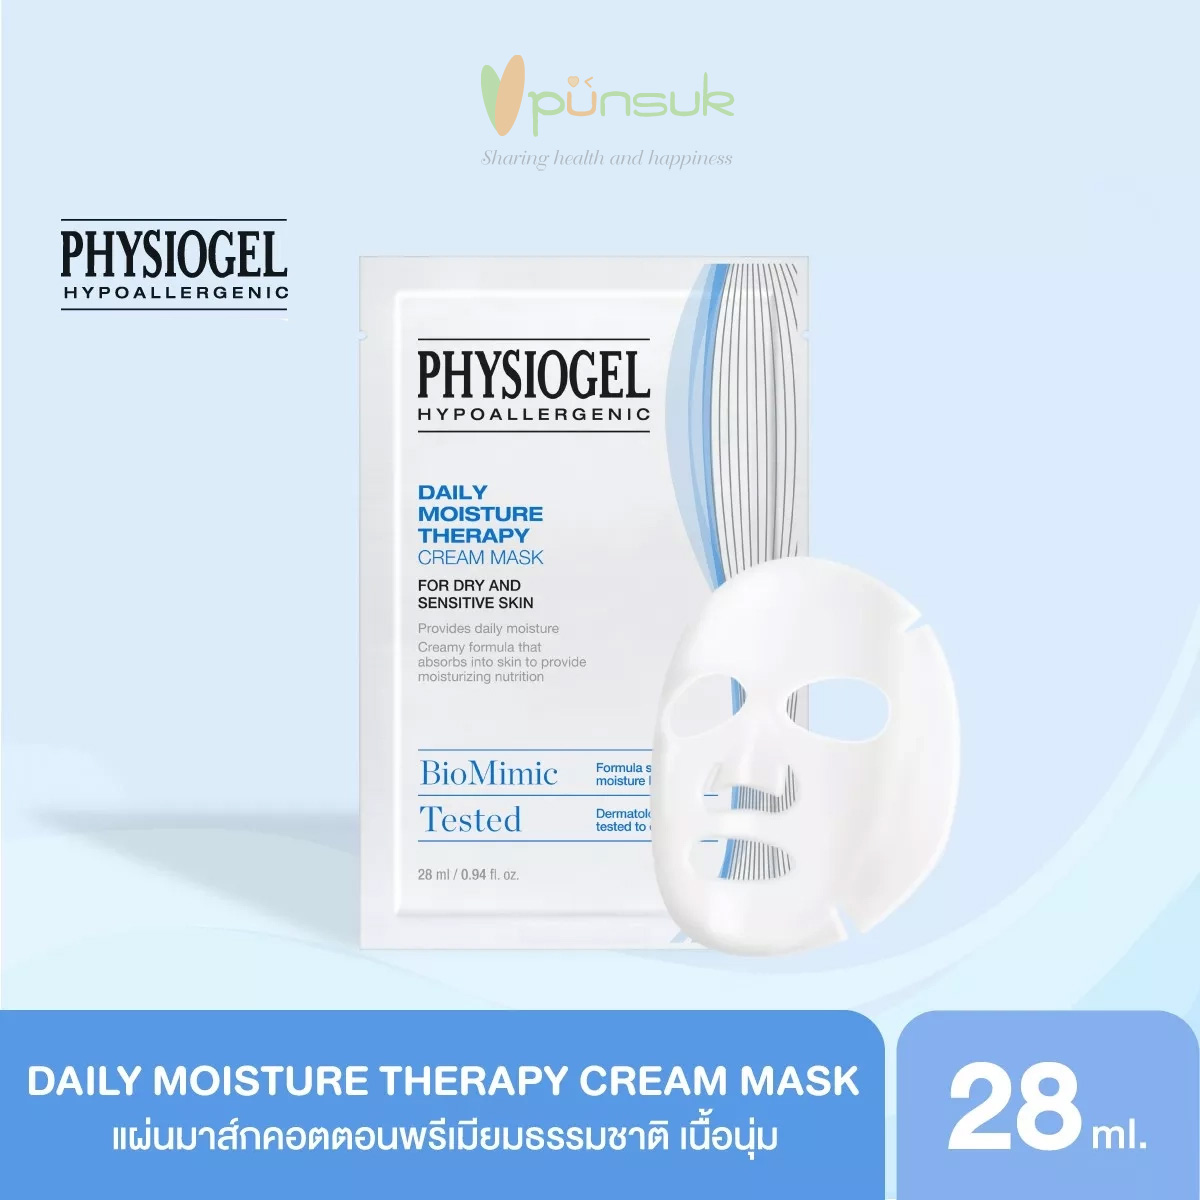 PHYSIOGEL Daily Moisture Therapy Cream Mask ฟิสิโอเจล เดลี่ มอยซเจอร์ เทอราพี ครีม มาสค์